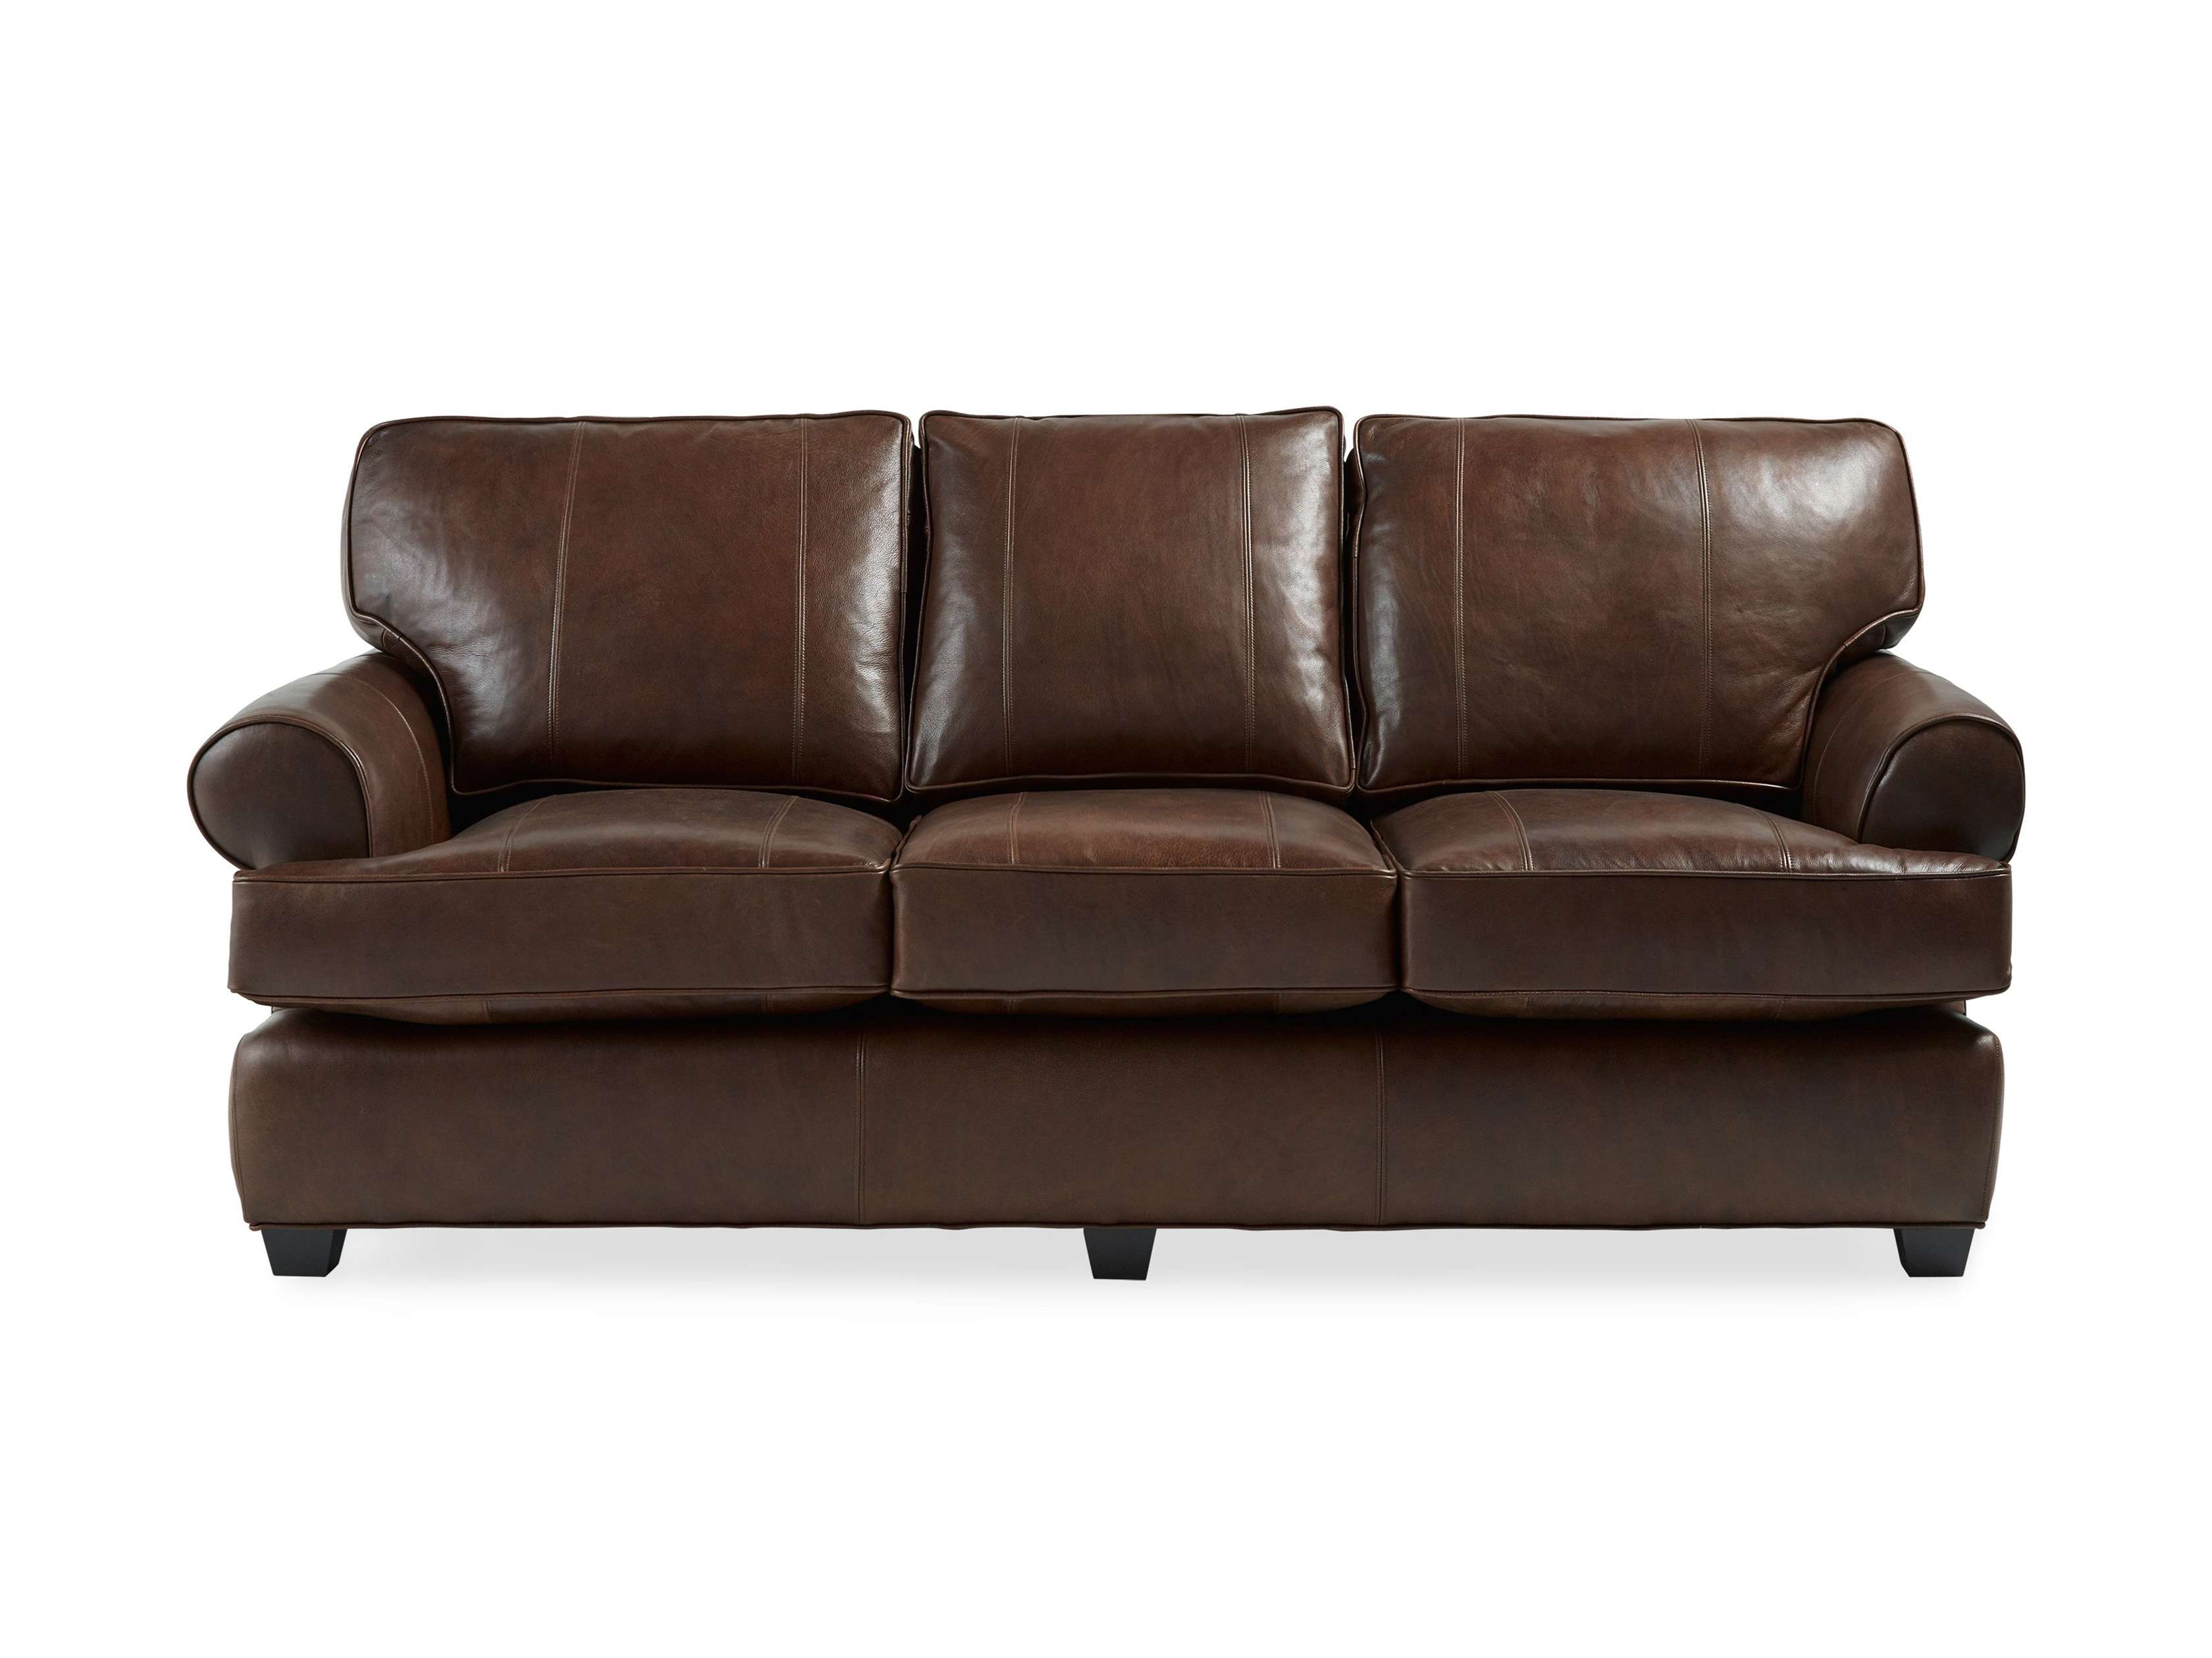 Hadley Leather Sofa Arhaus, 8 Way Hand Tied Leather Sofa